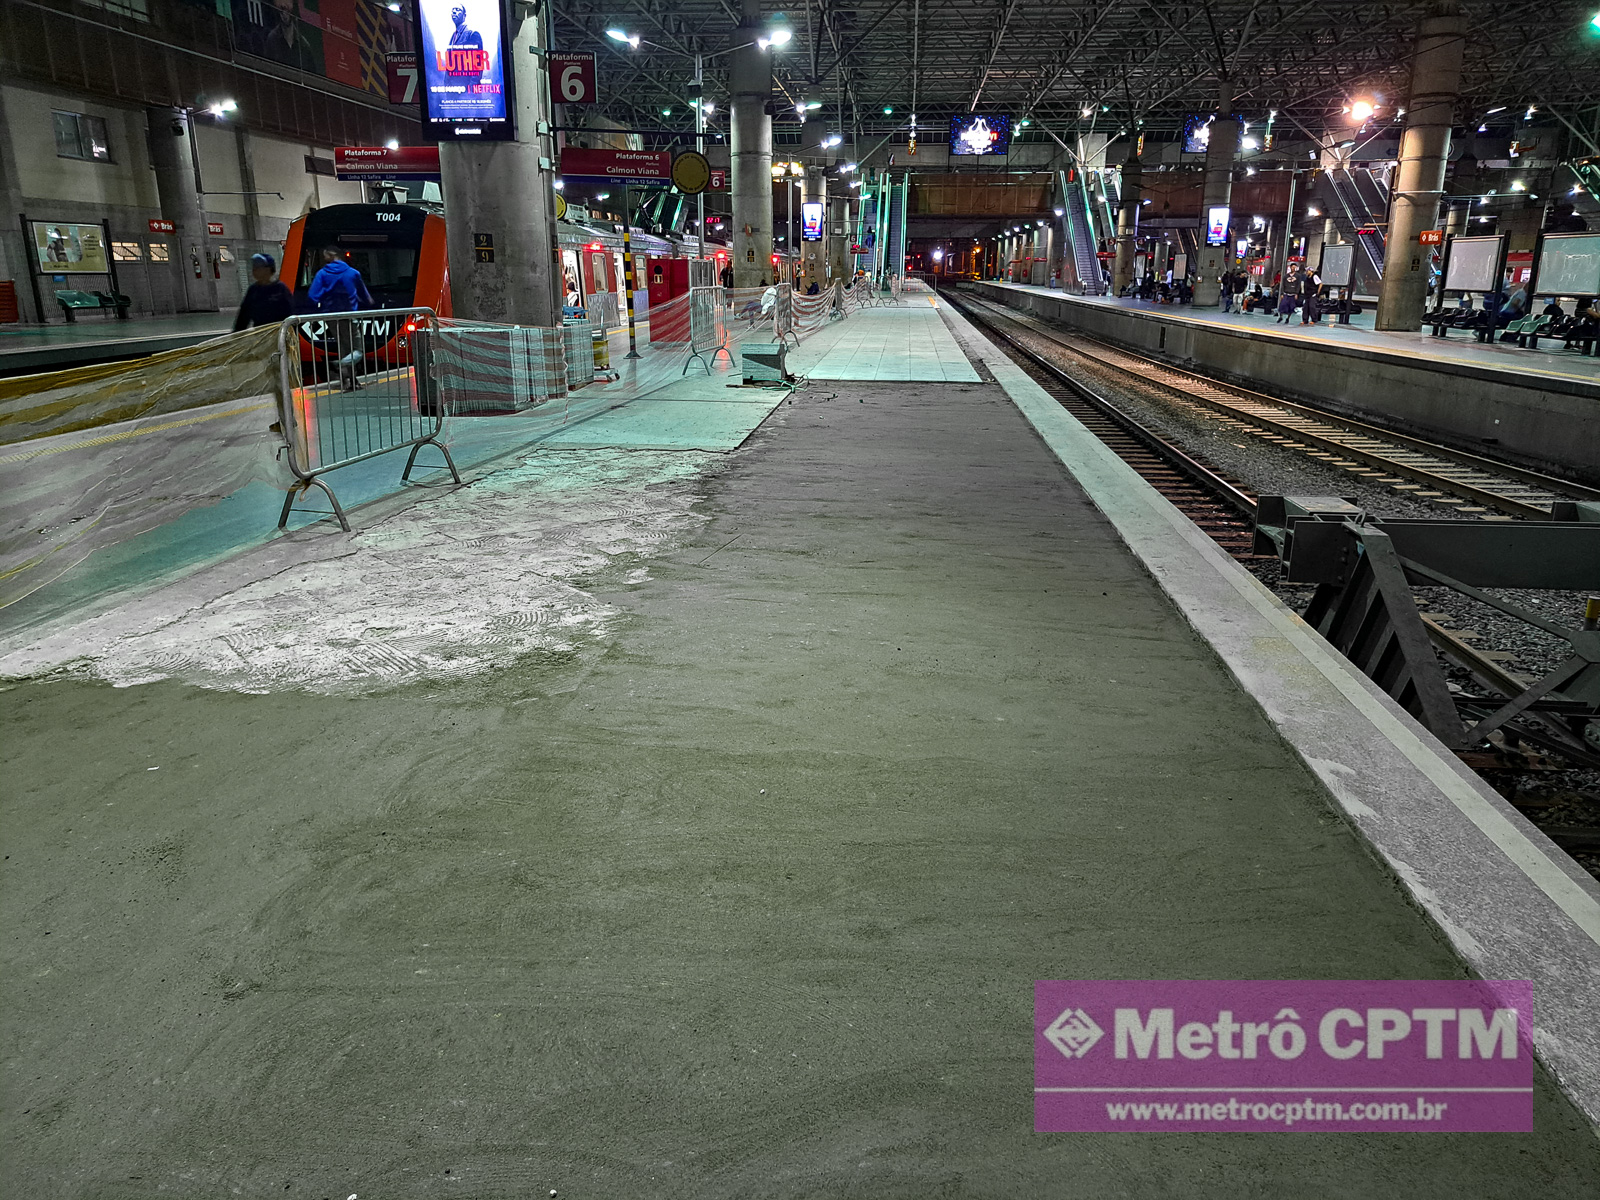 Obras na plataforma 6 da estação Brás (Jean Carlos) - Metrô CPTM